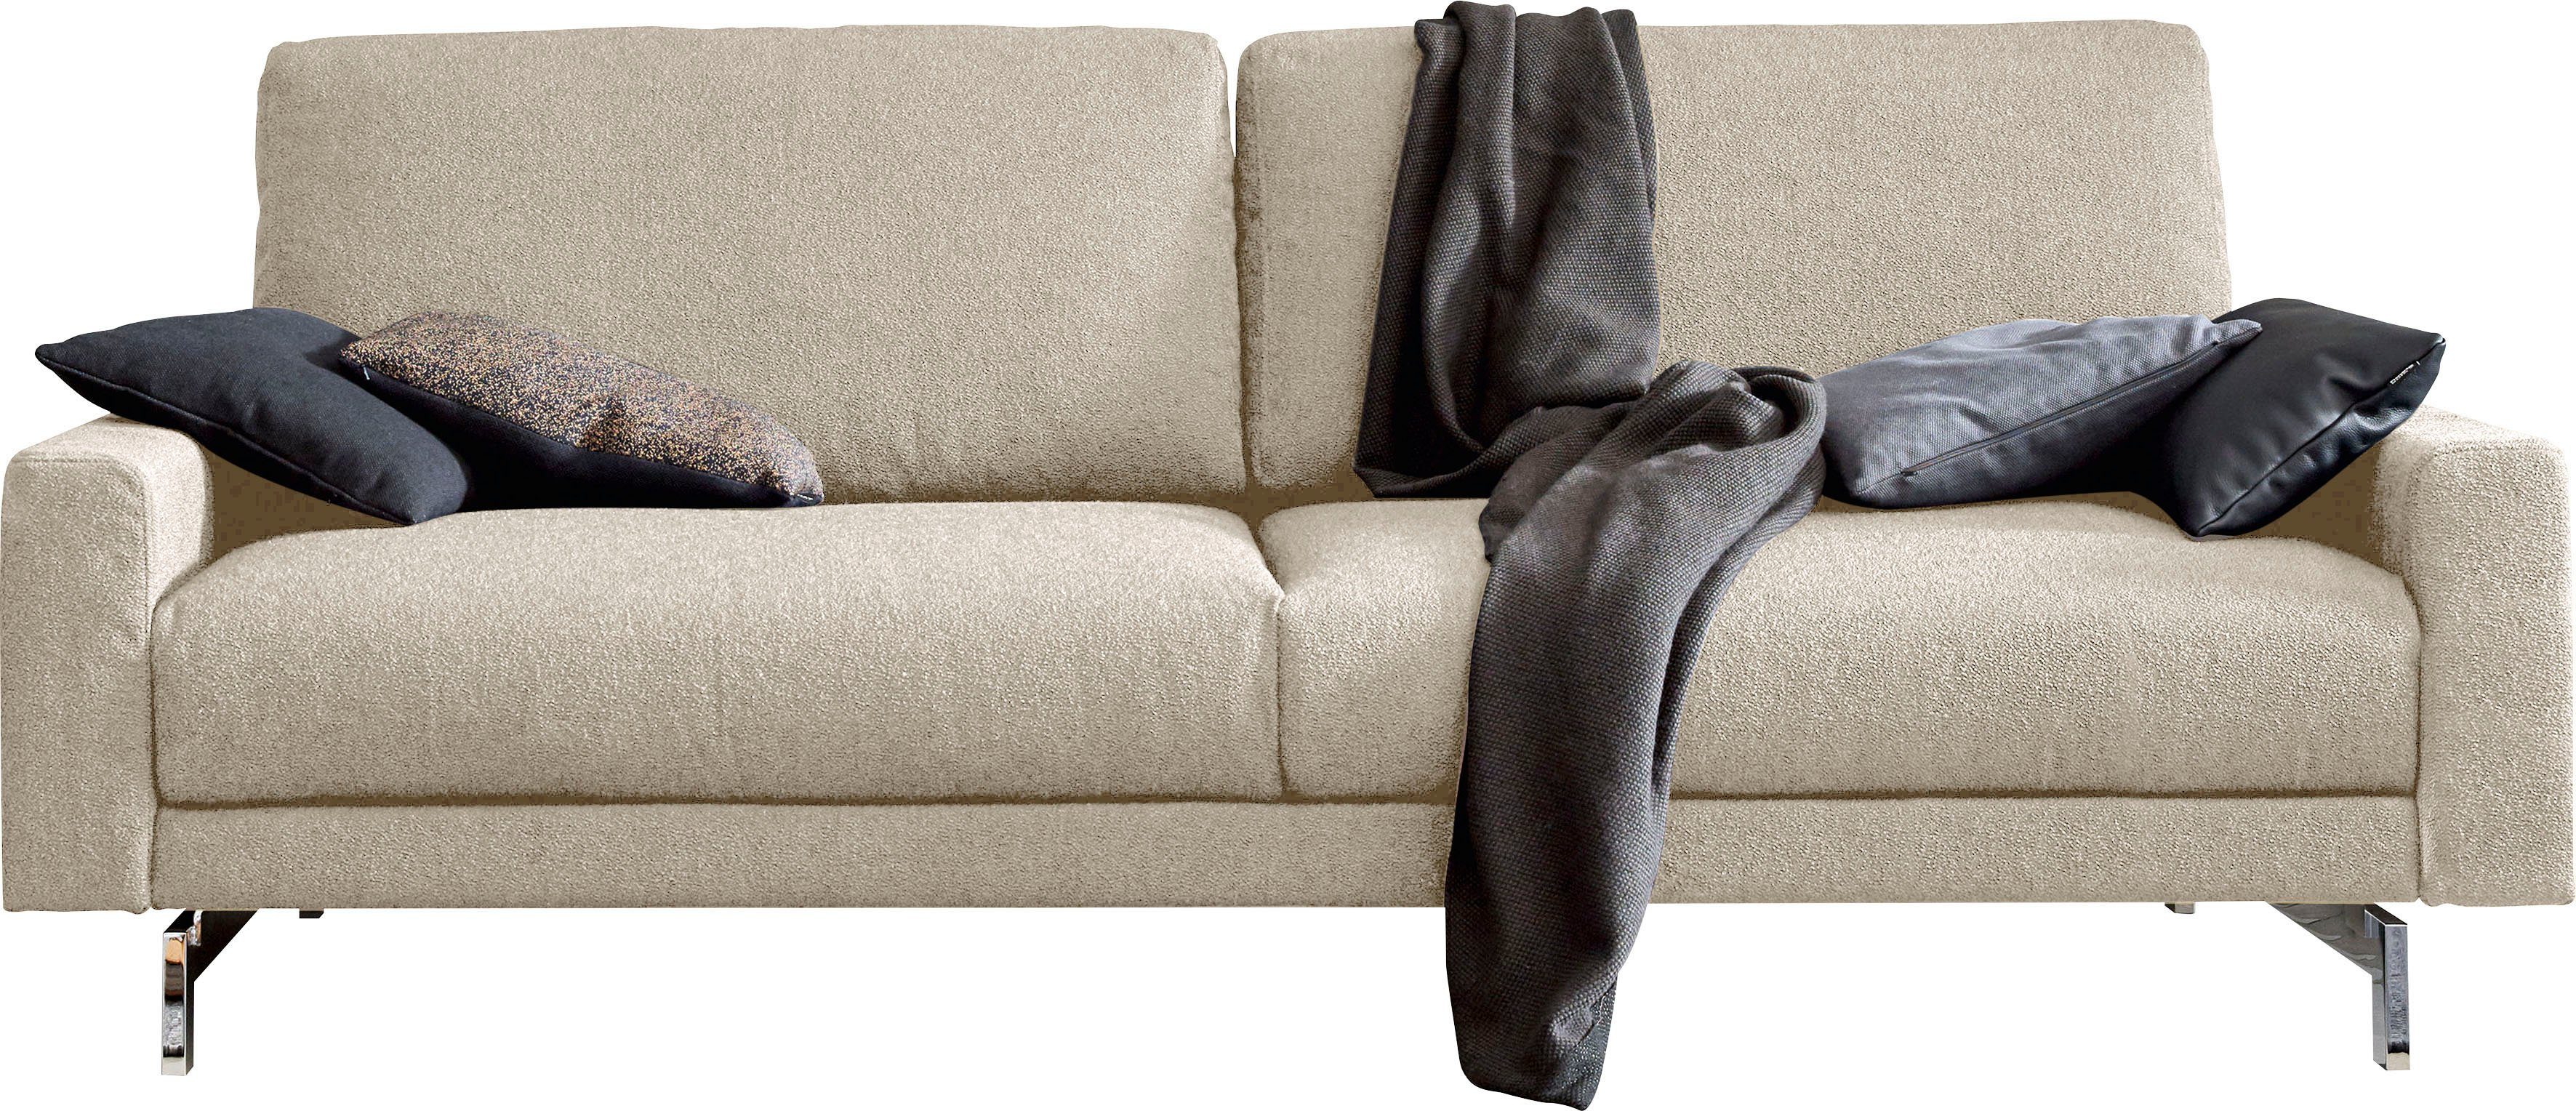 Armlehne cm sofa hs.450, hülsta 3-Sitzer glänzend, Breite 204 niedrig, Fuß chromfarben